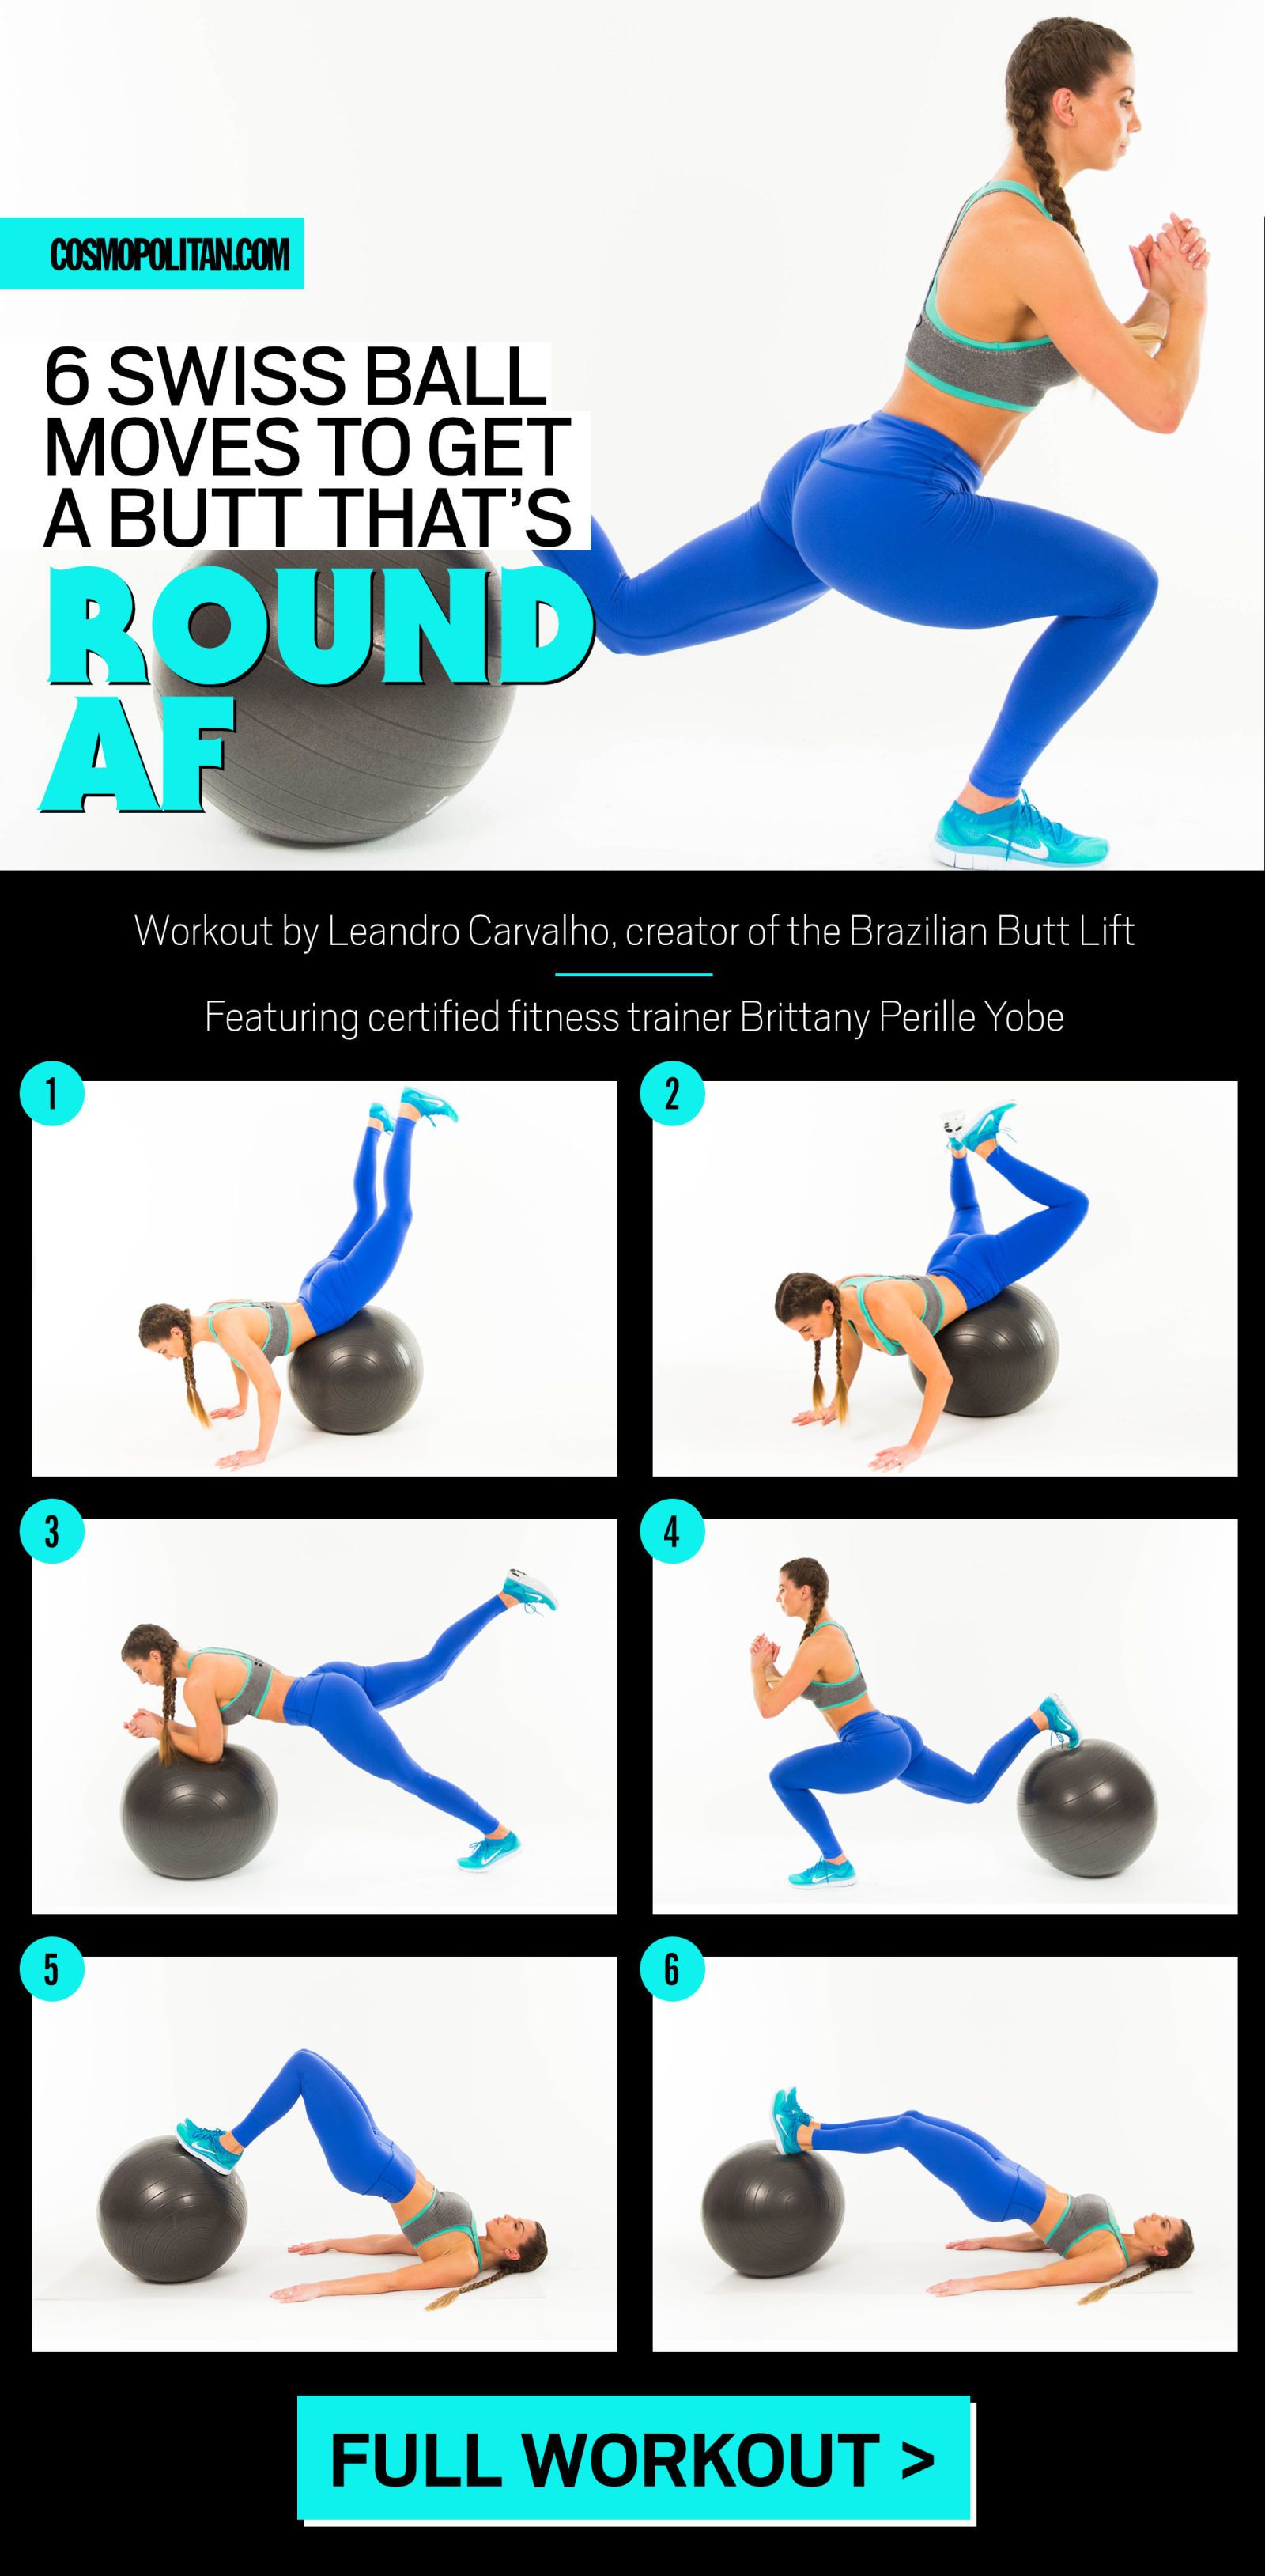 exercises to do with balance ball